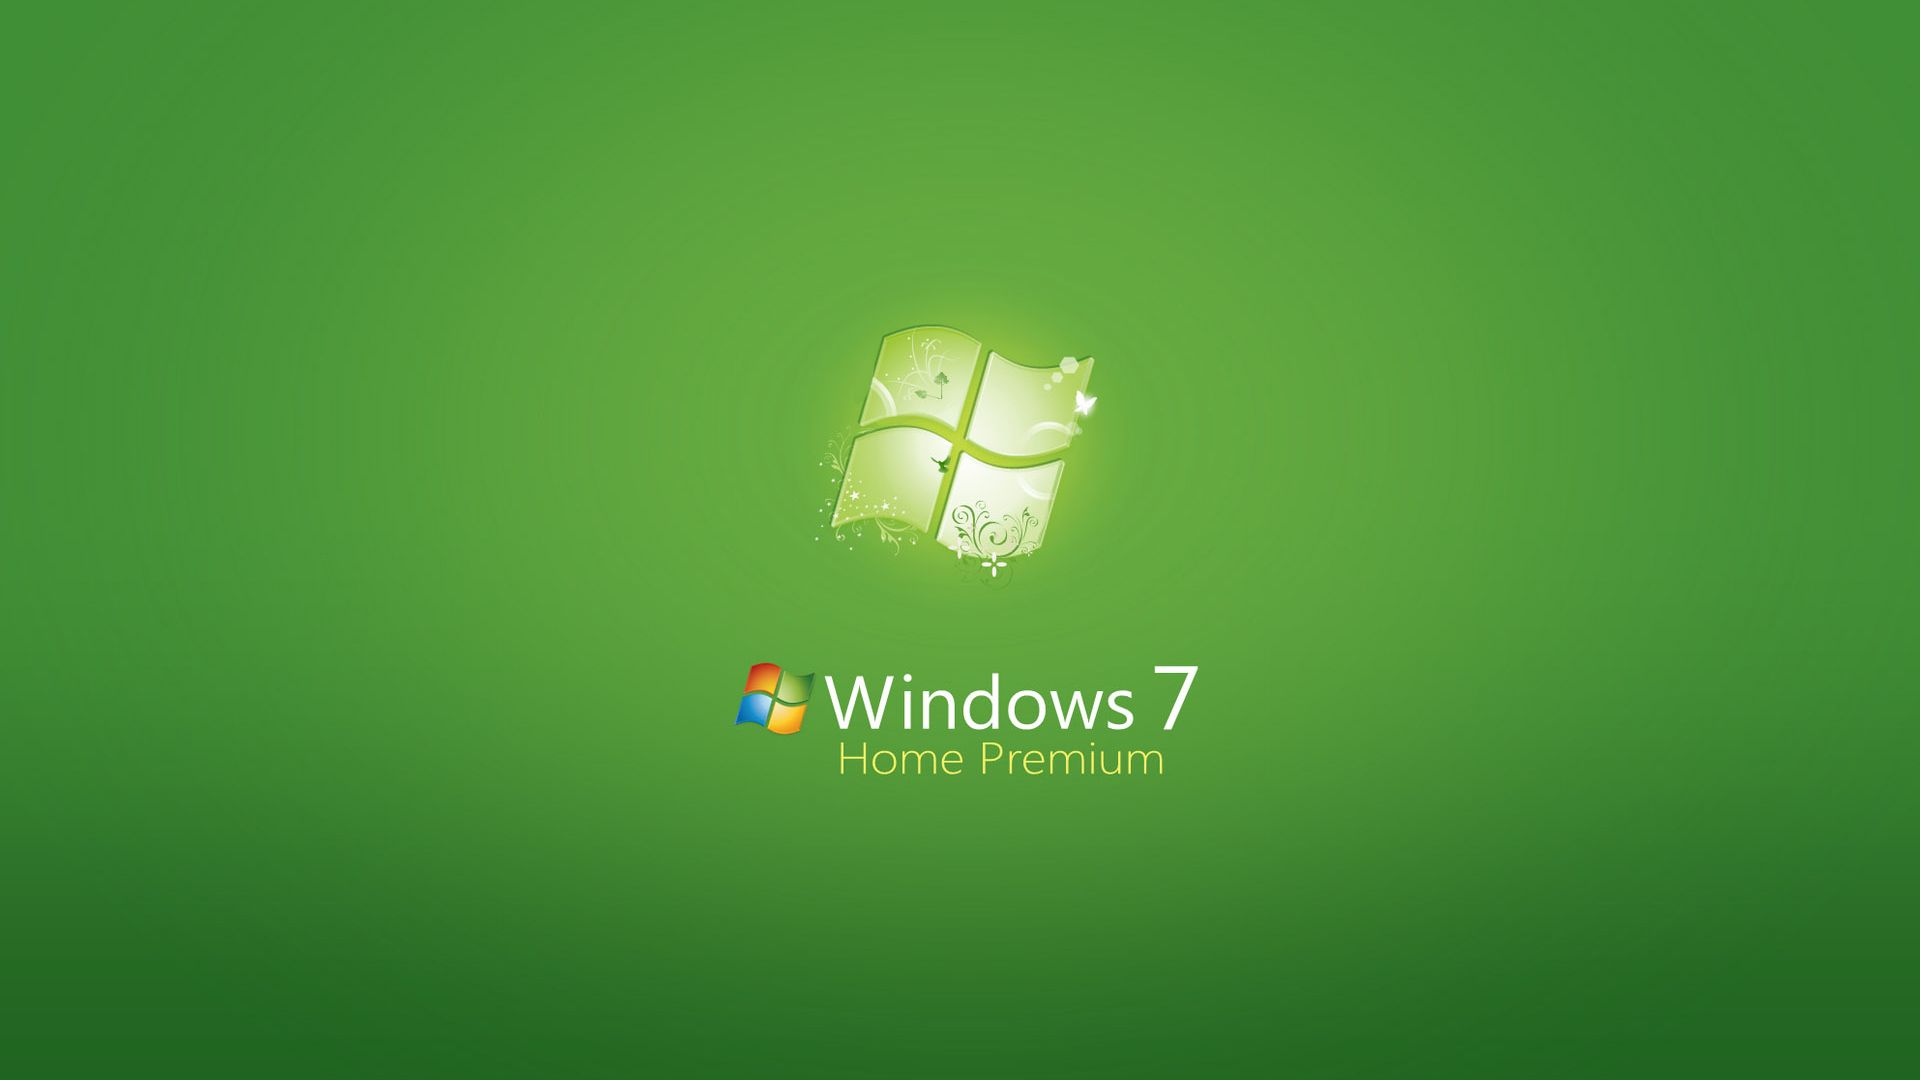 Windows 7 Home Premium Wallpapers